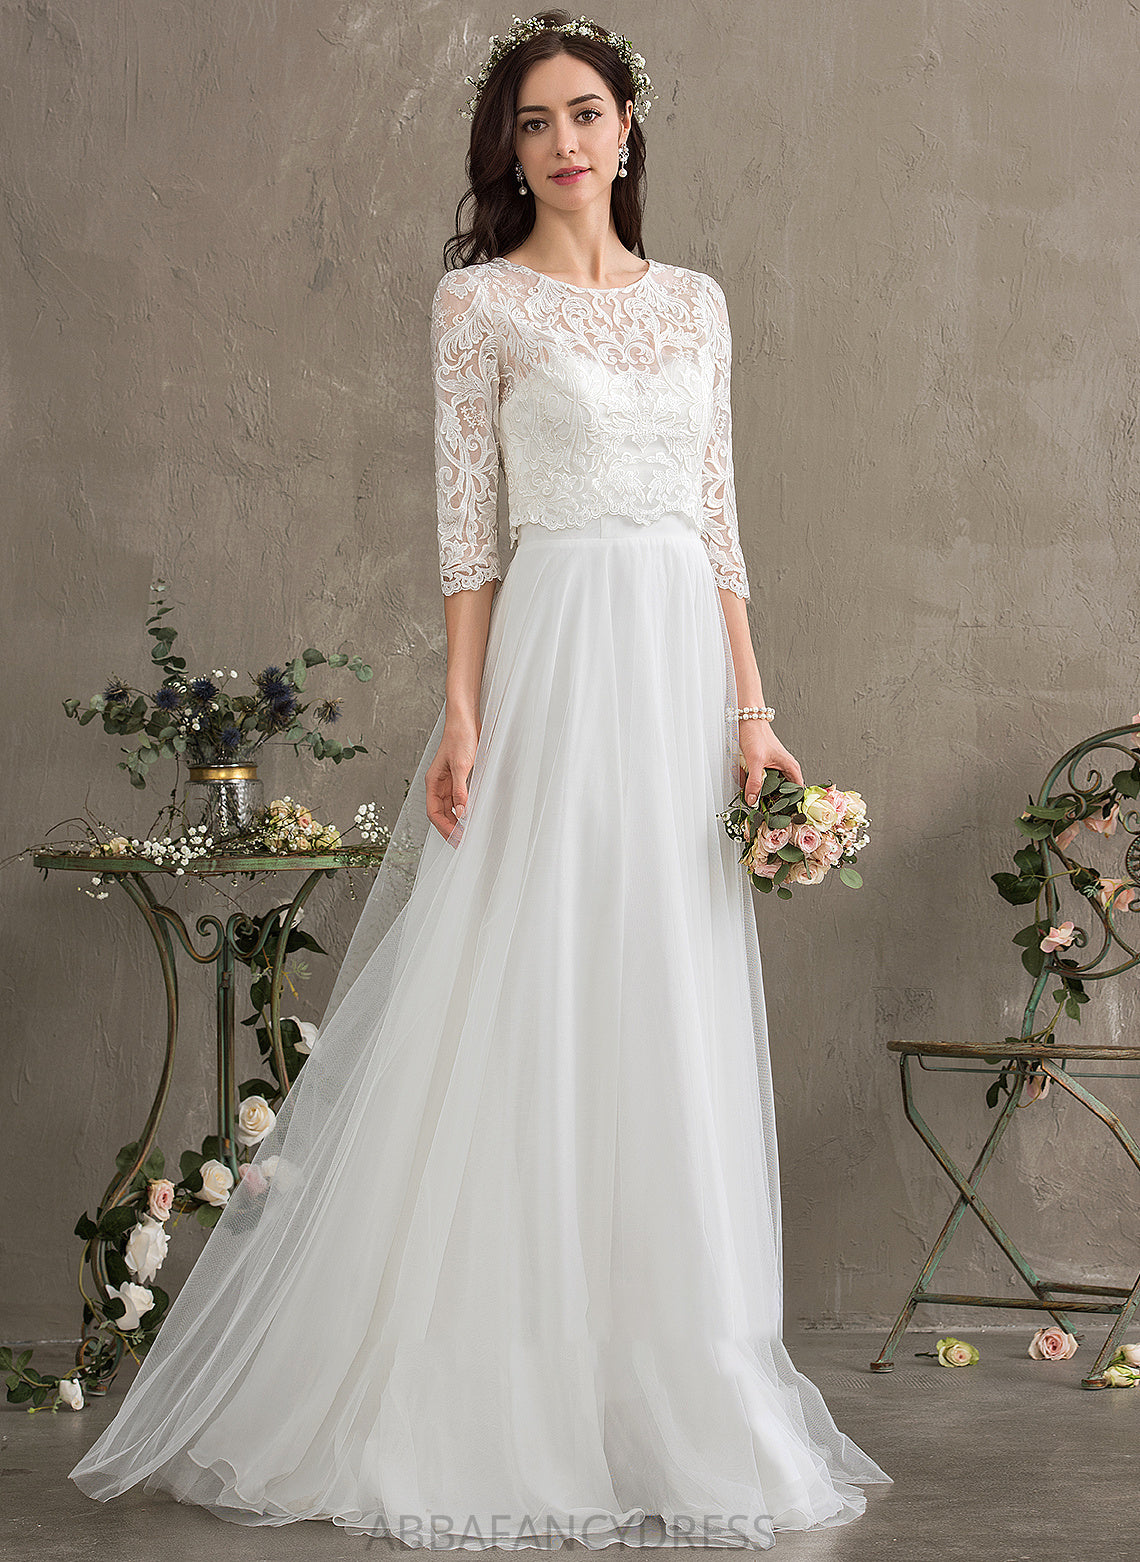 Wedding Floor-Length Tulle Dress A-Line Kirsten Wedding Dresses Sweetheart